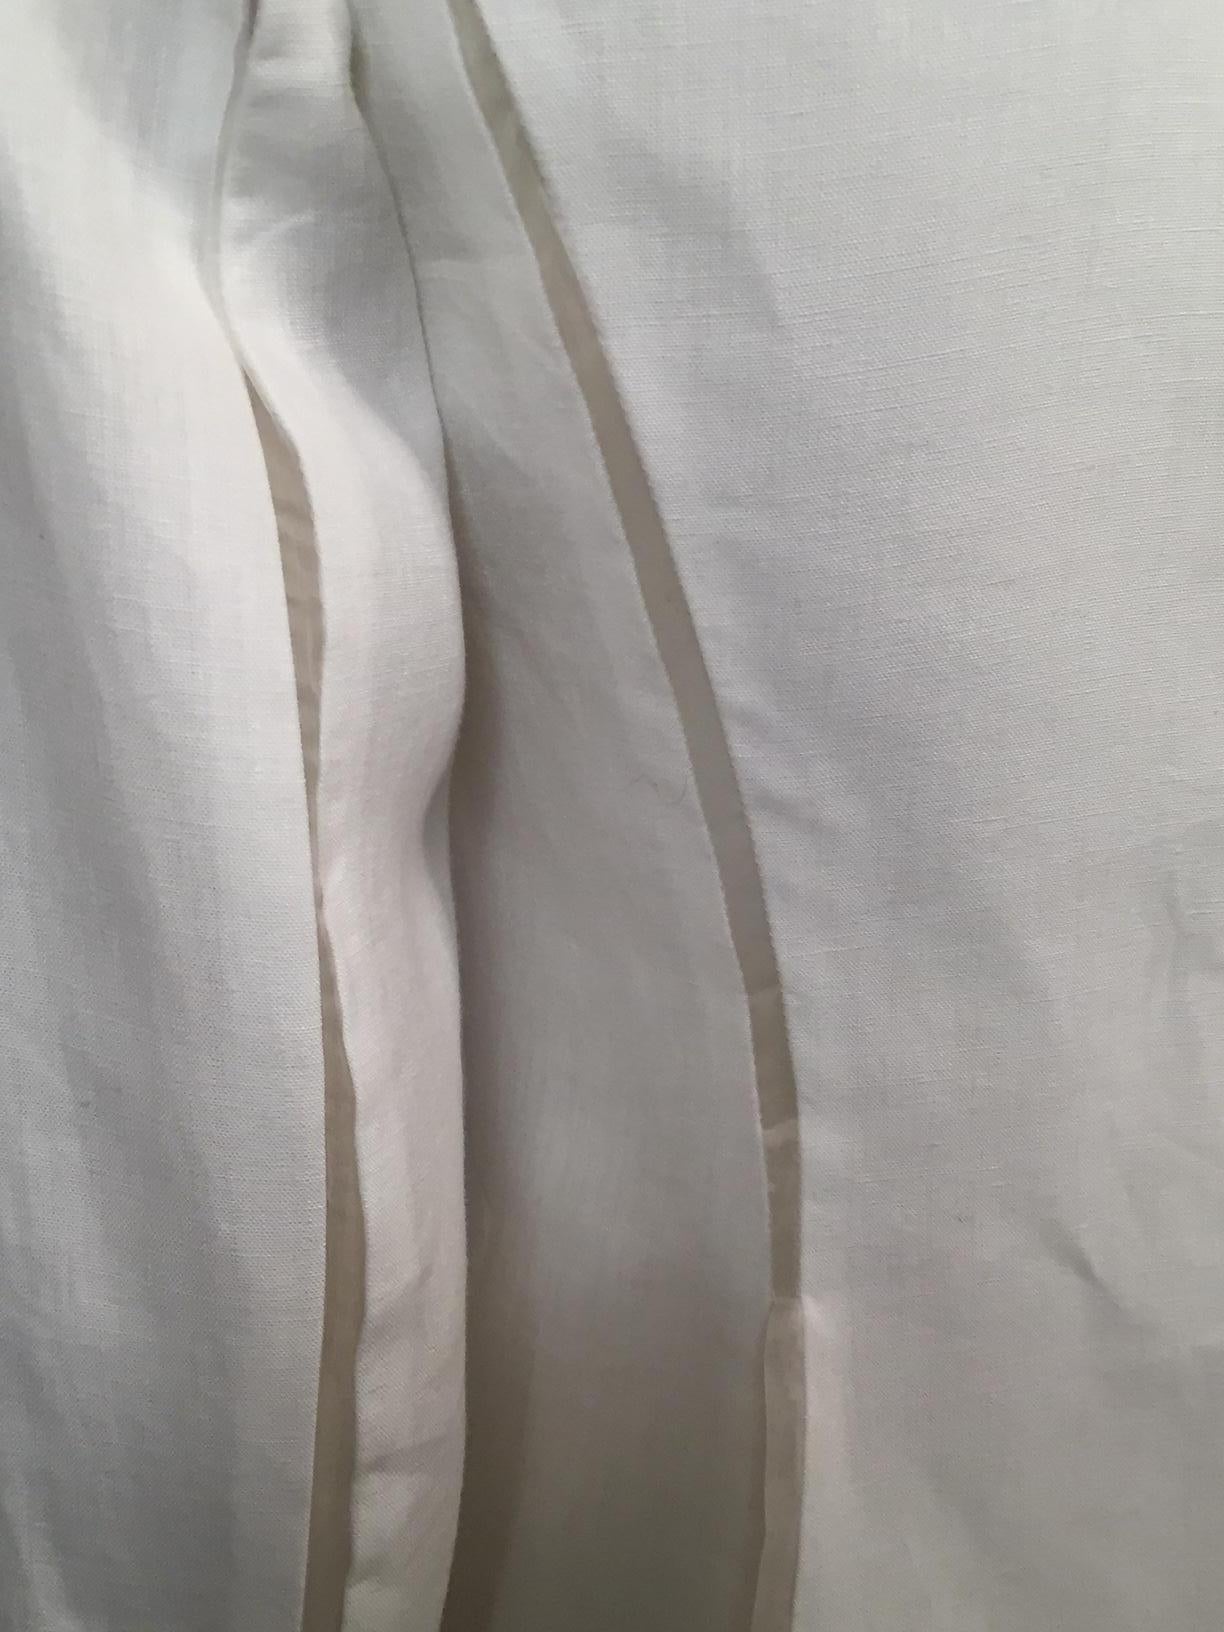 Gianfranco Ferre White Linen Jacket with Sheer Silk Organza Panels 4